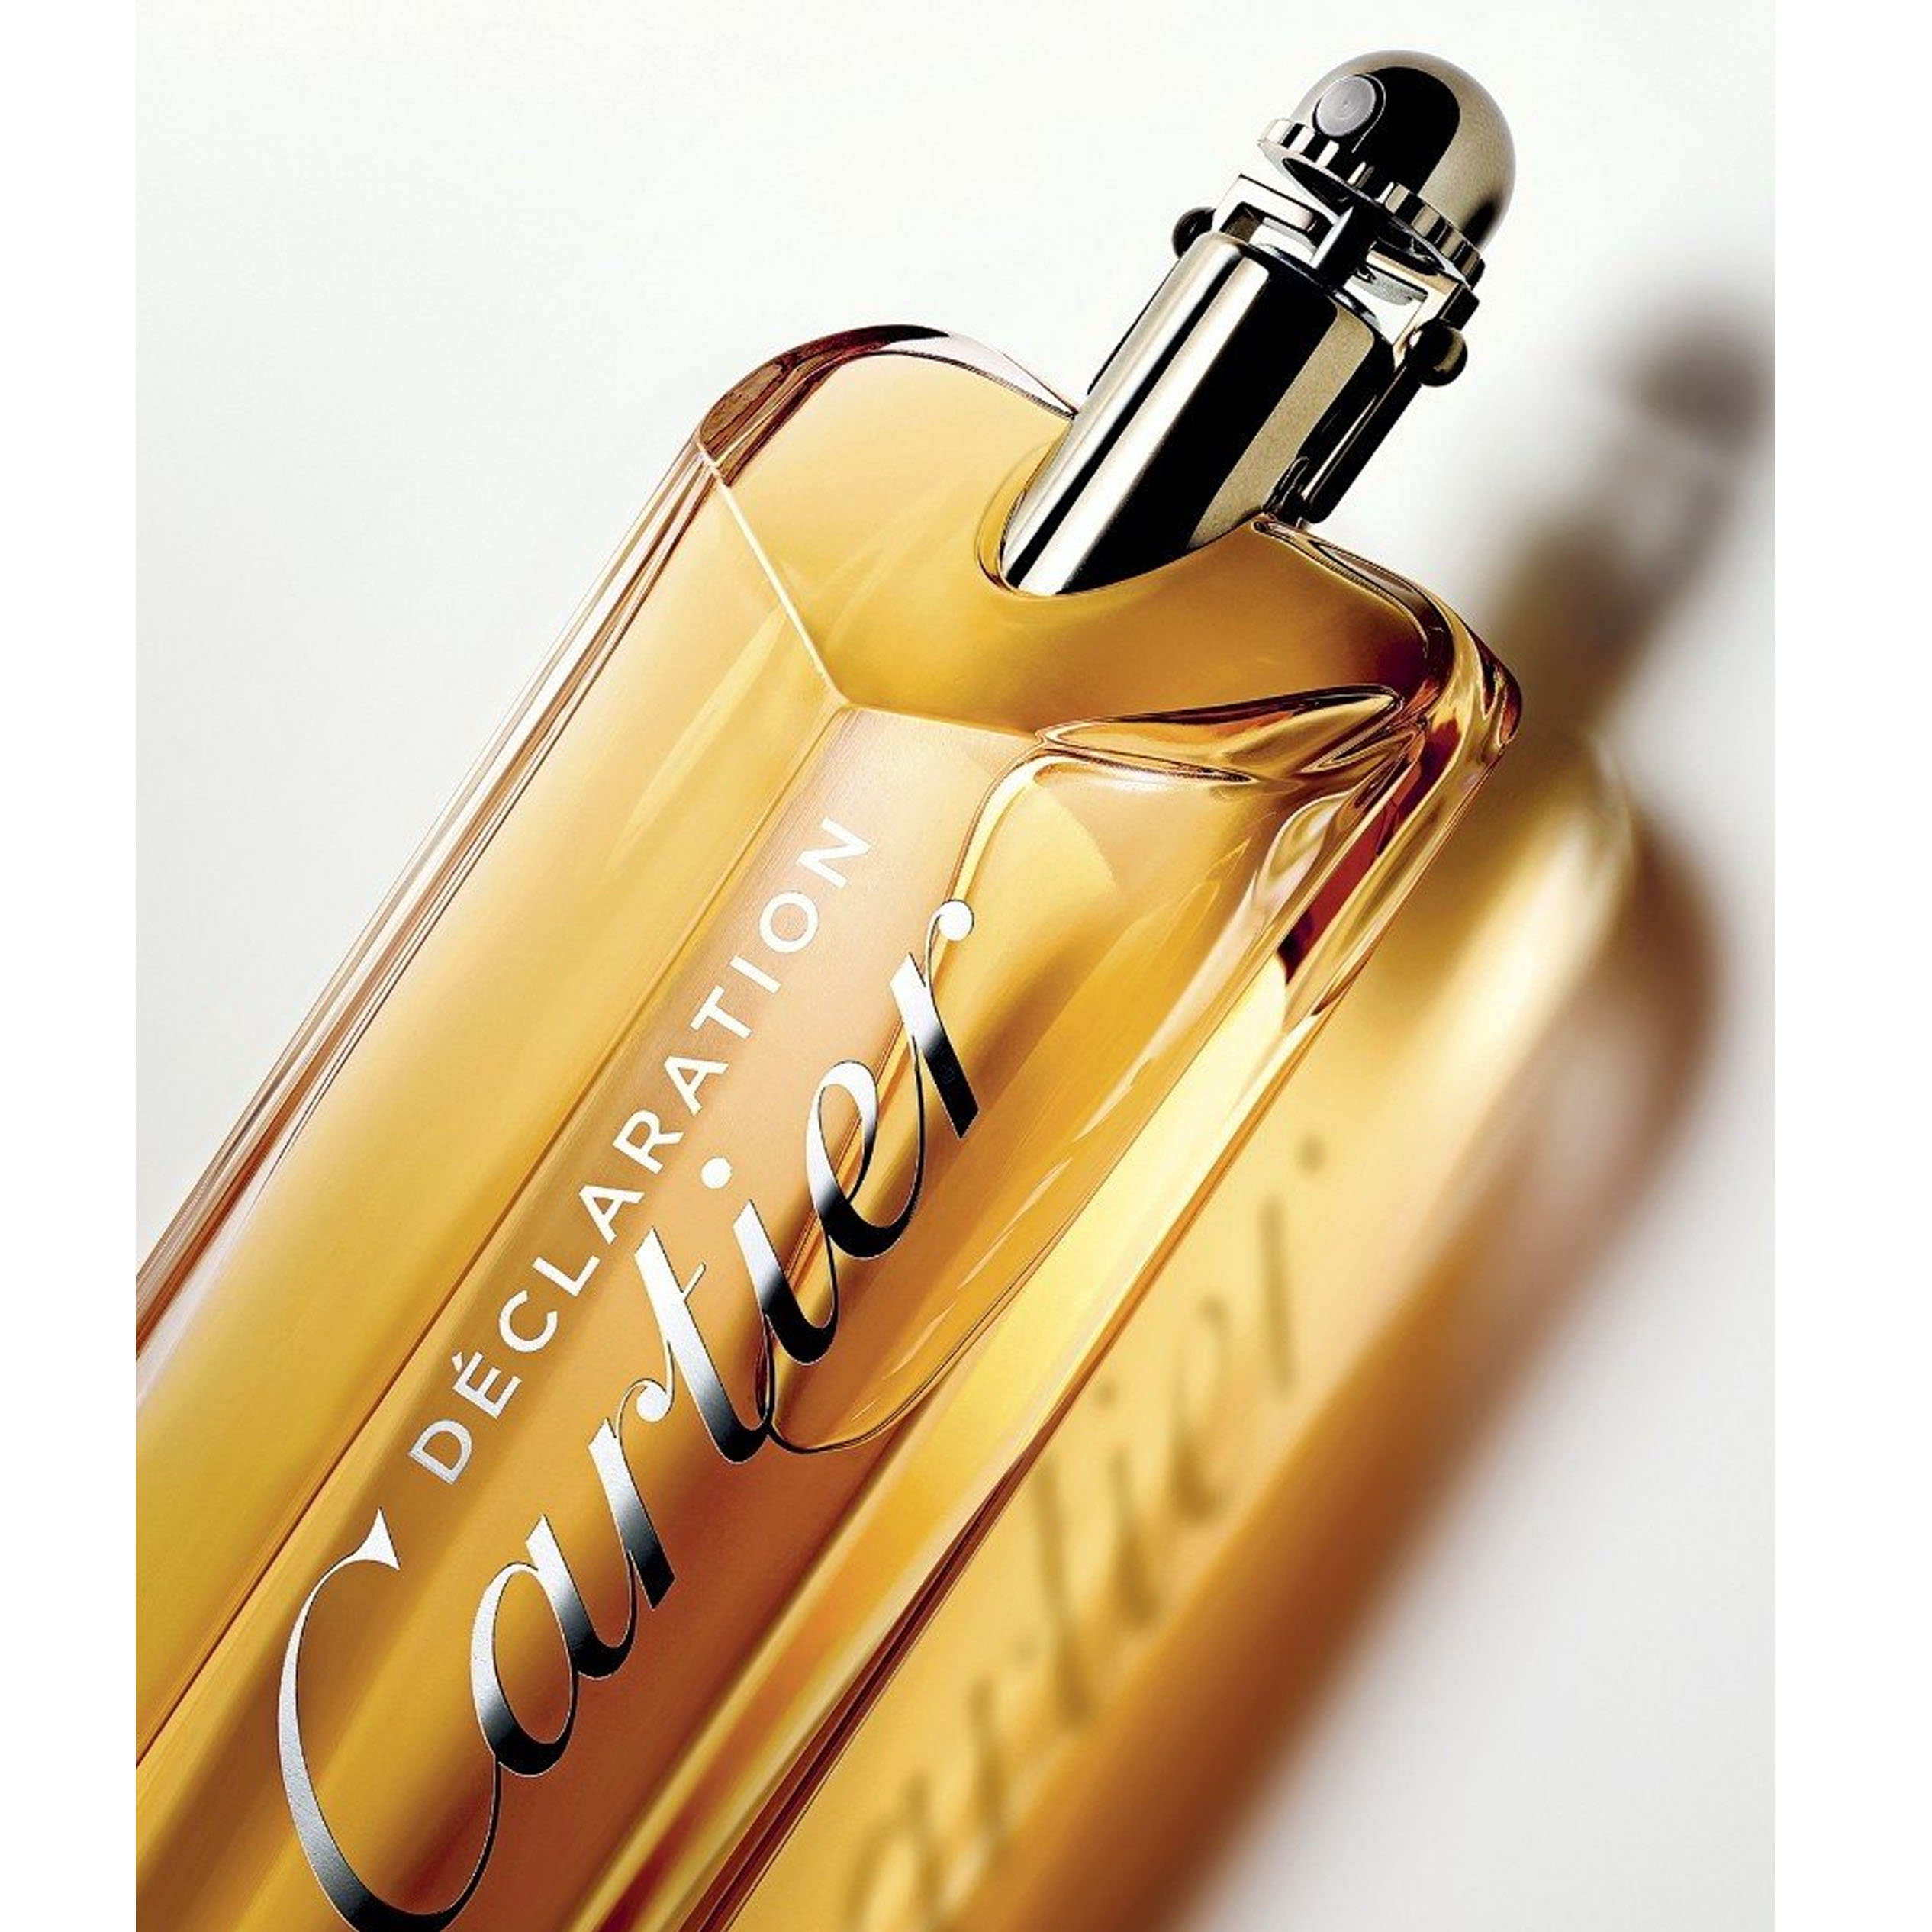 Déclaration Parfum Cartier  (Perfume Replica Con Fragancia Importada)- Hombre